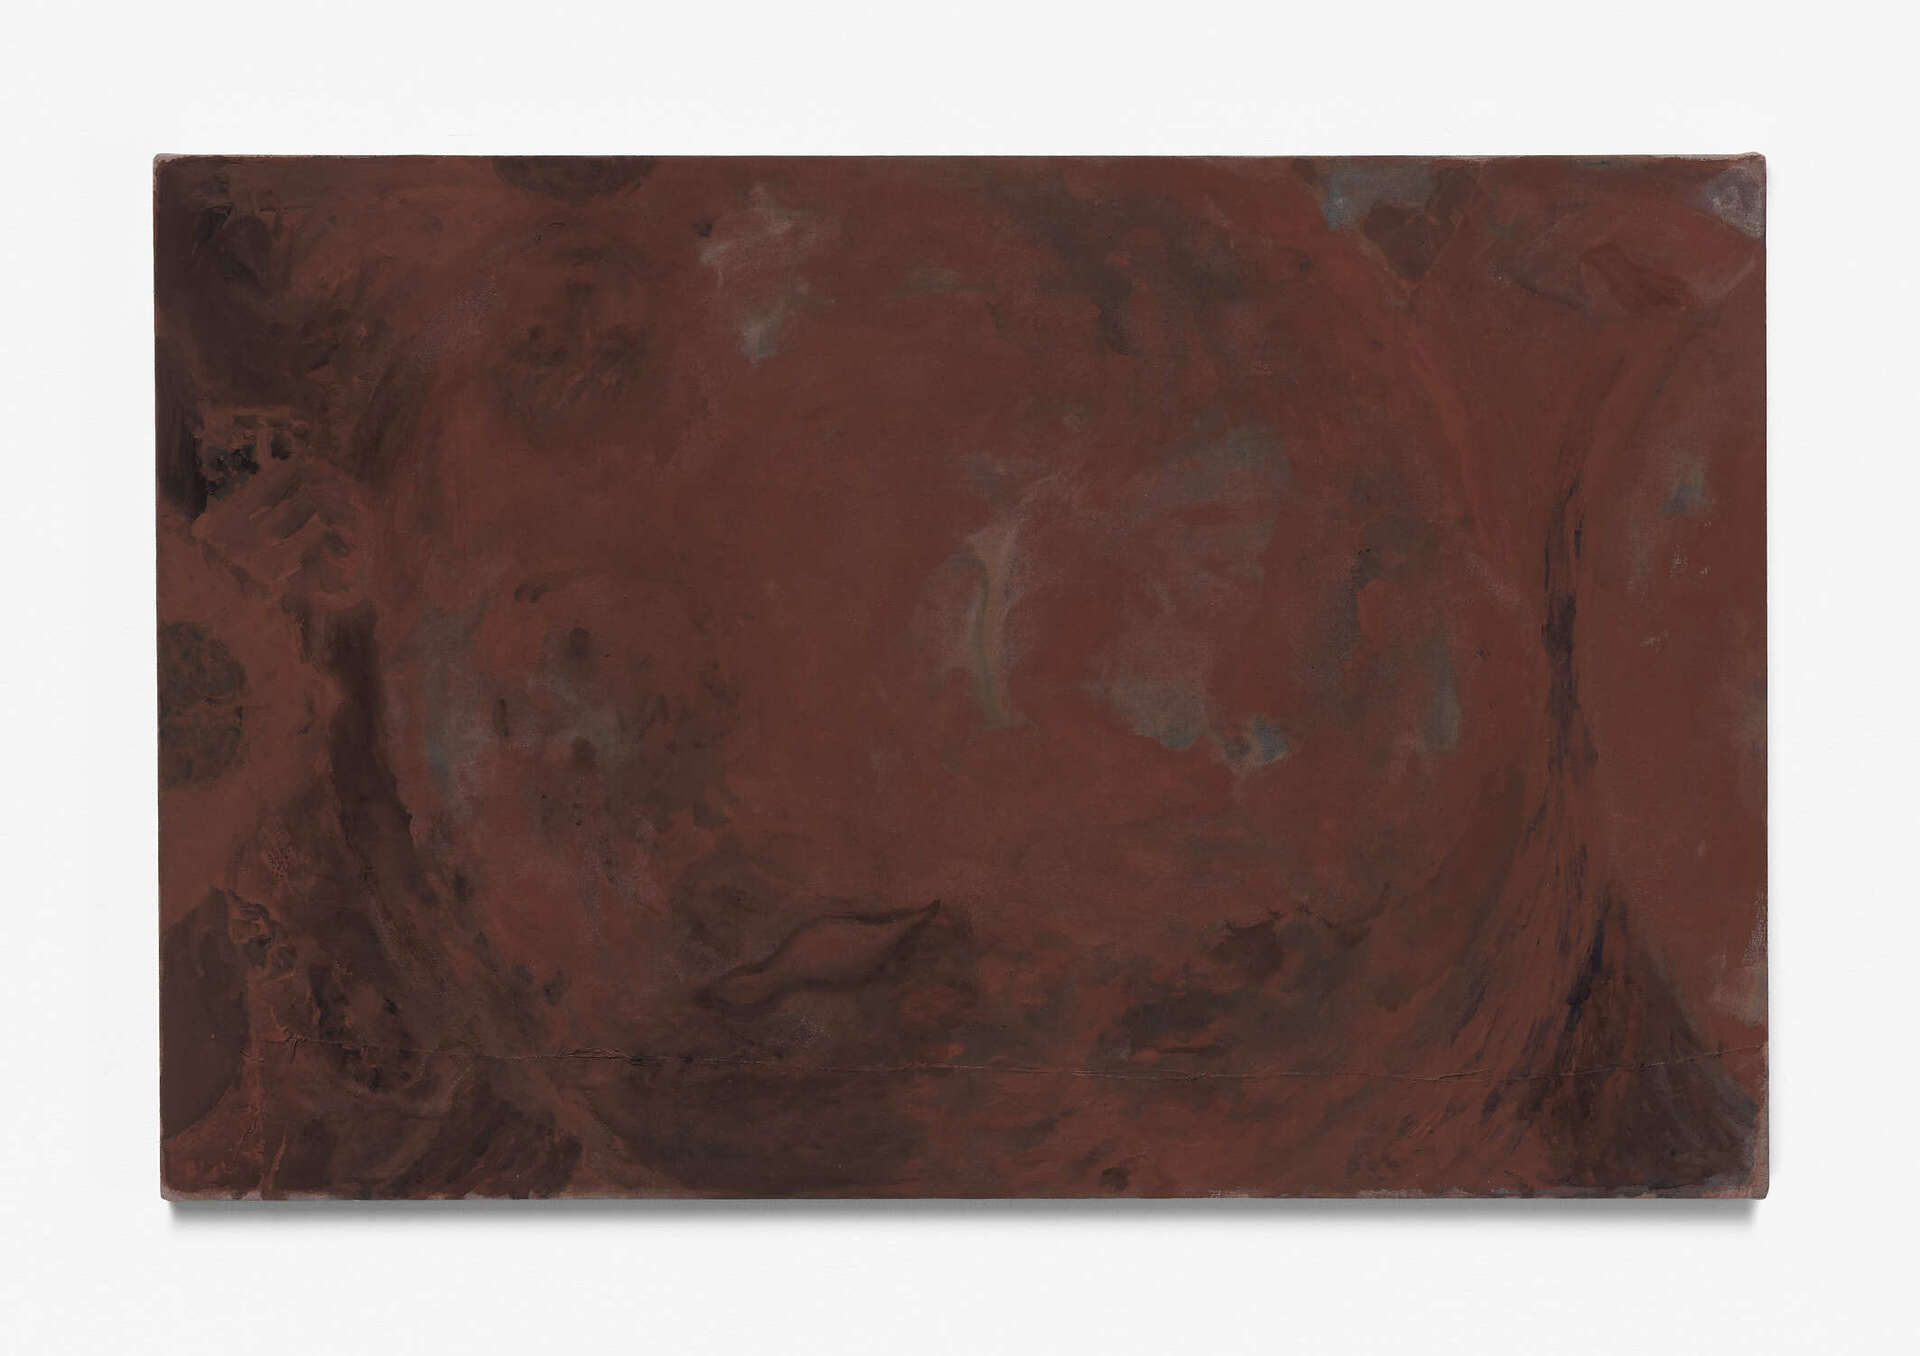 Allan Rand, Mudworks (untitled no. 4) 2021, Acrylic, gesso, chalk pastel on cotton, 68.2 x 44.1 x 1.8 cm.